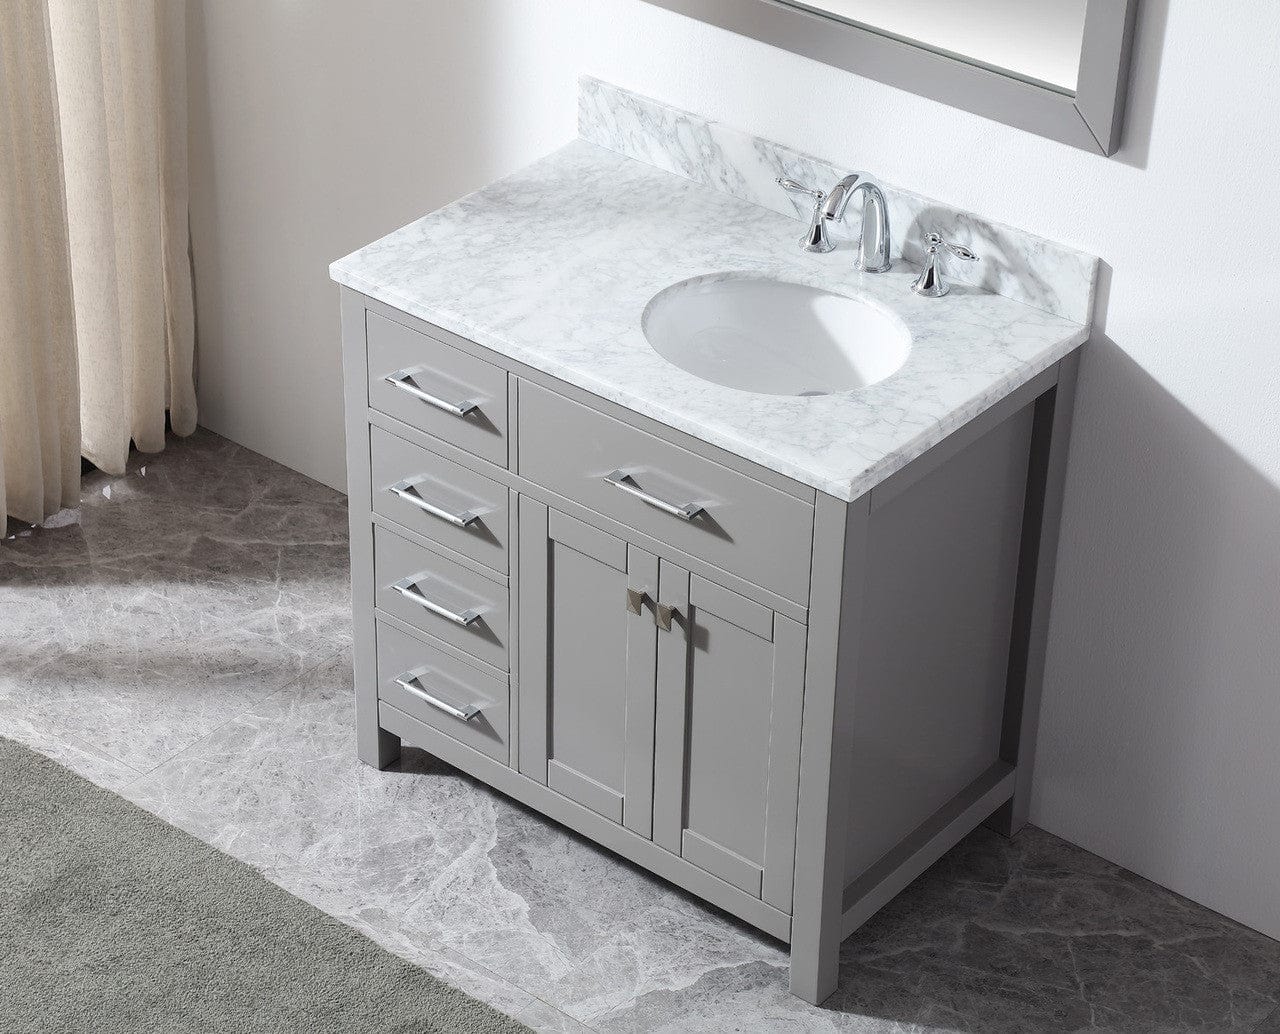 Virtu USA Caroline Parkway 36 Single Bathroom Vanity in Cashmere Grey - Leftside basin w/ Marble Top & Round Sink